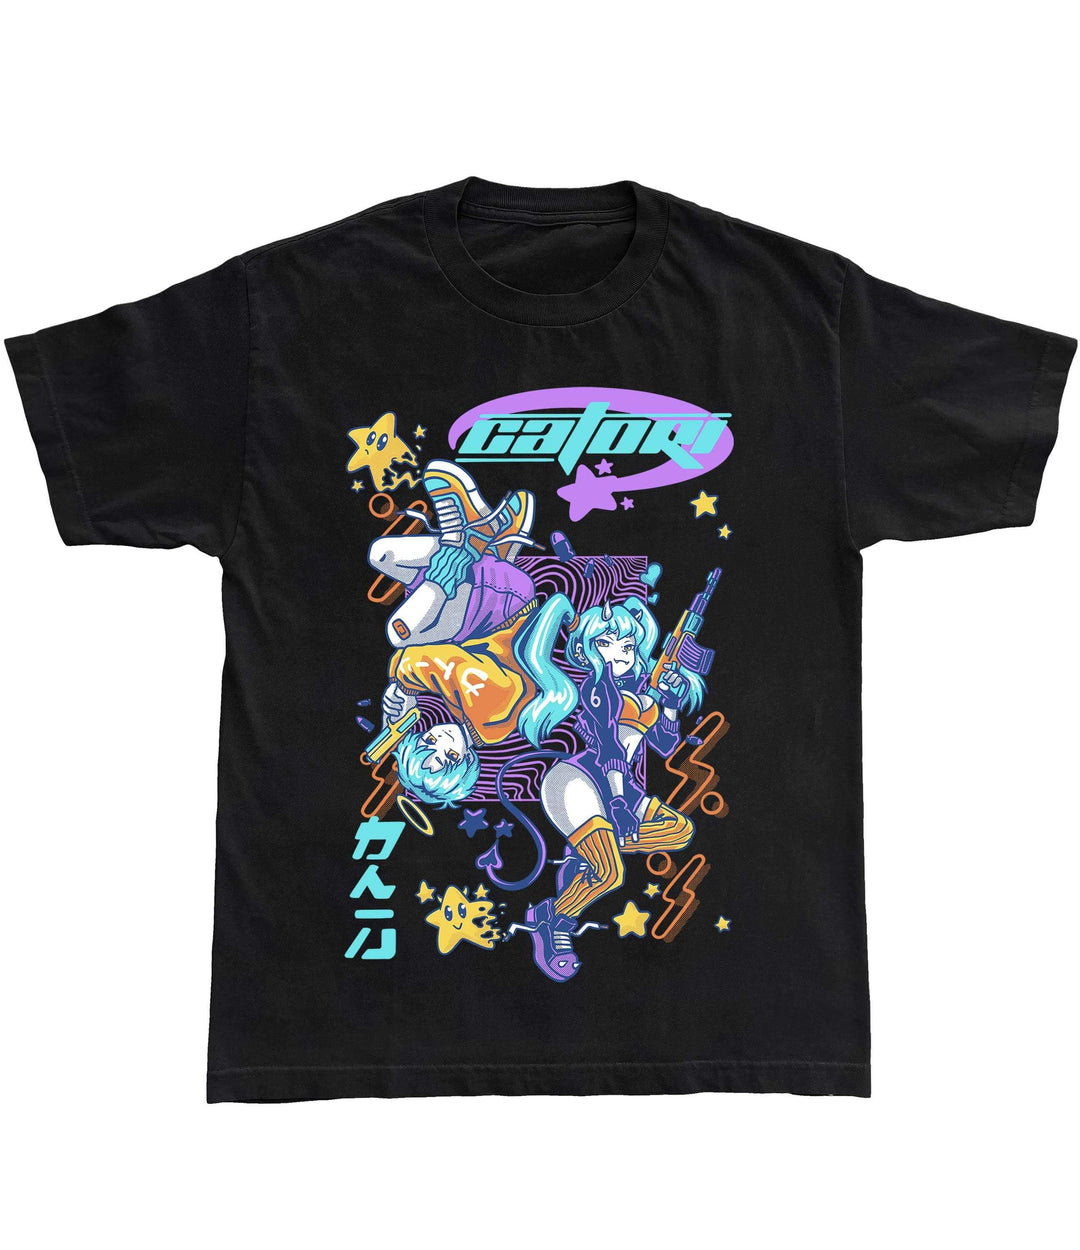 2Gunners T-Shirt at Catori Clothing | Graphic & Anime Tees, Hoodies & Sweatshirts 